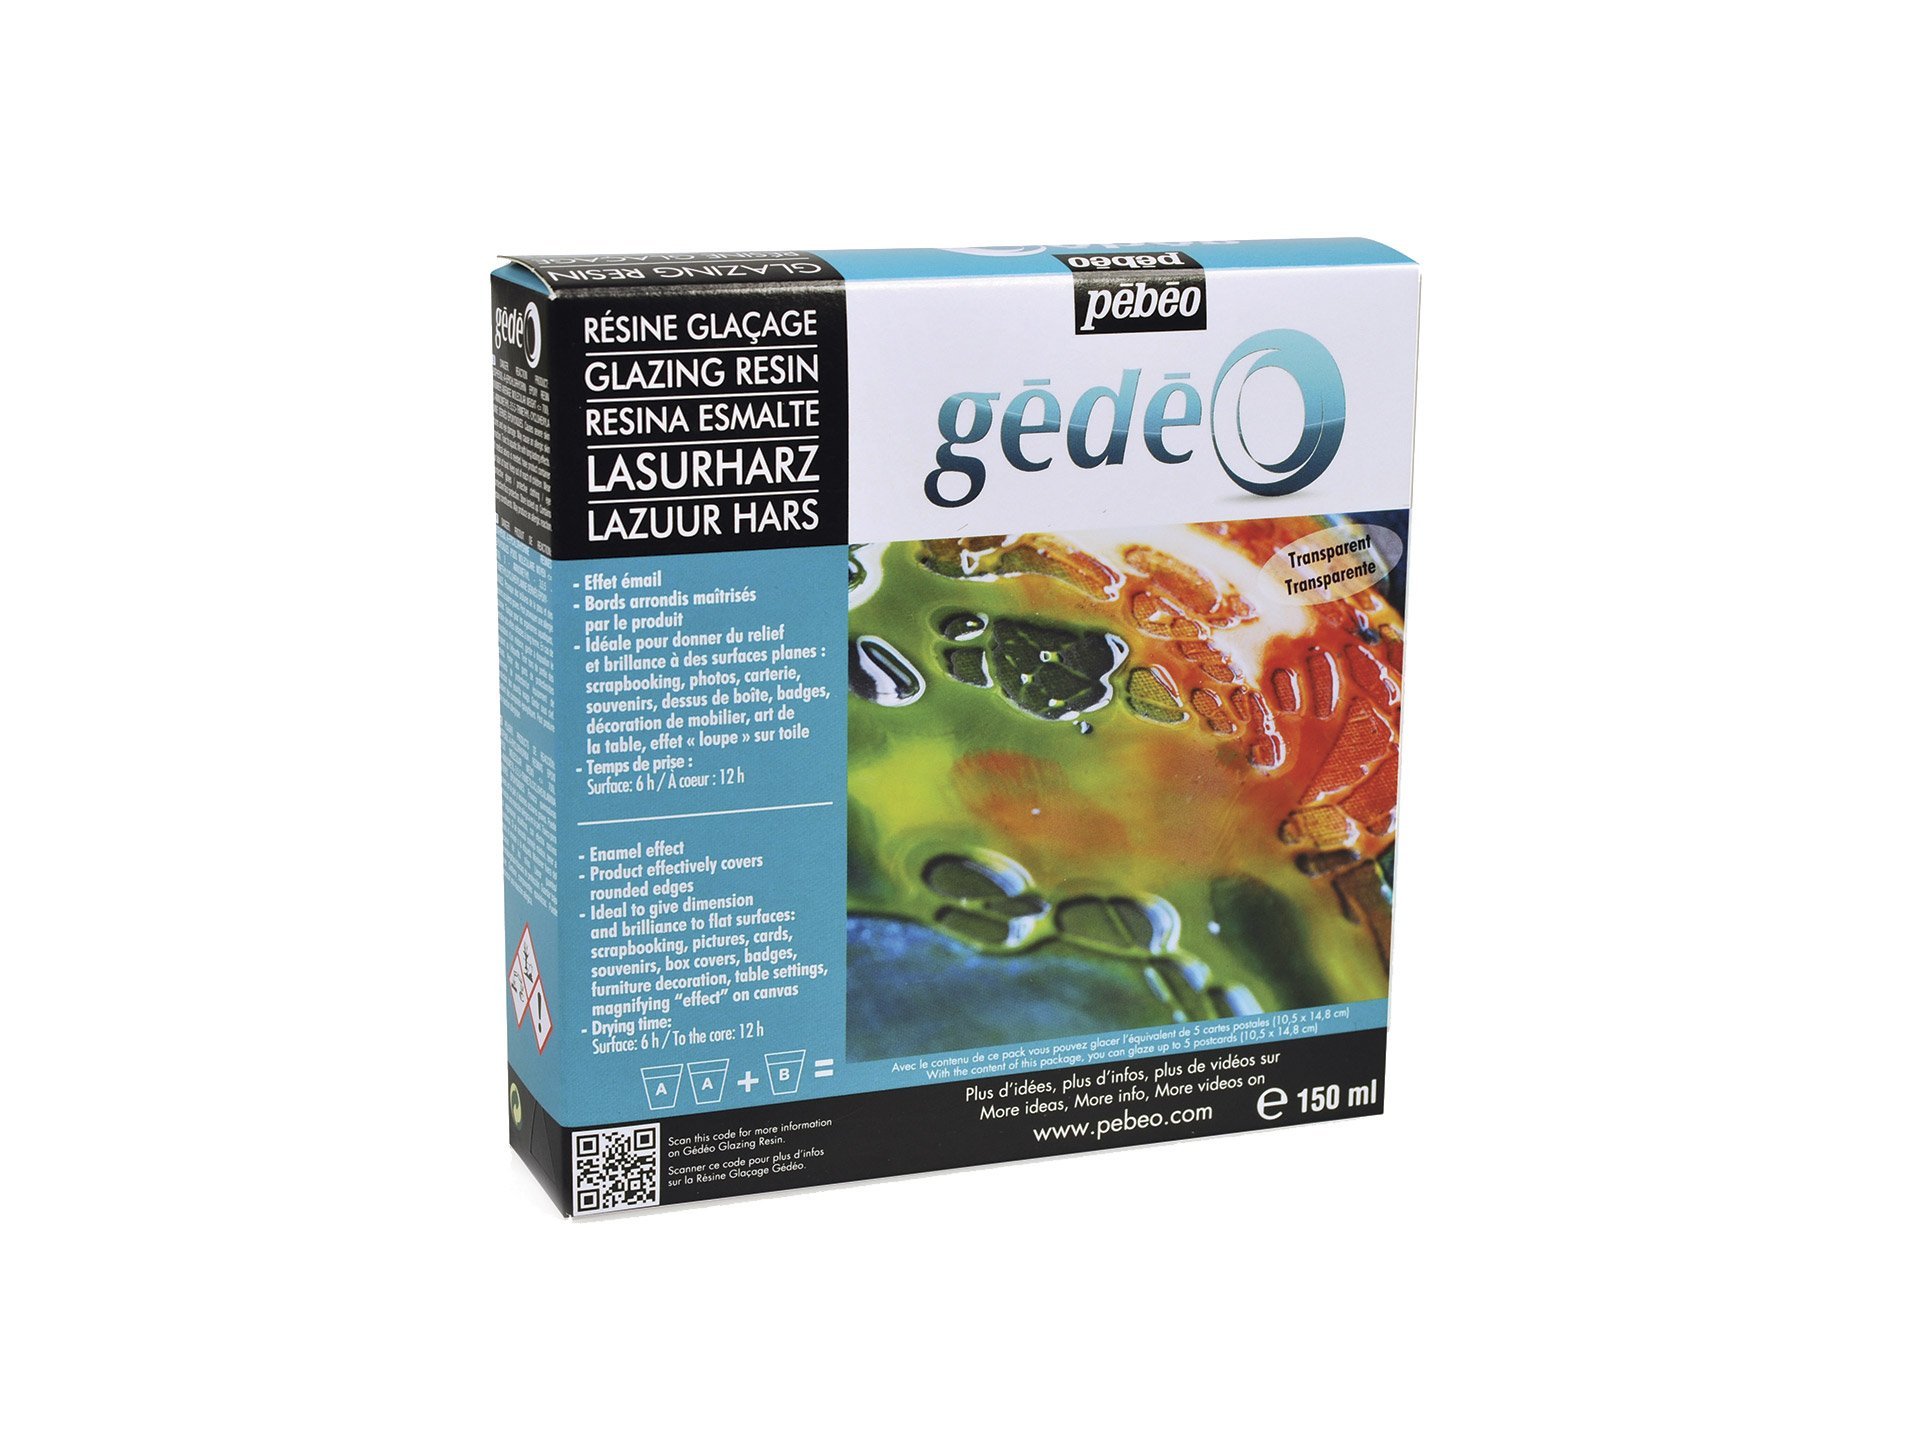 Buy Gedeo Glazing Resin Online At Modulor Online Shop